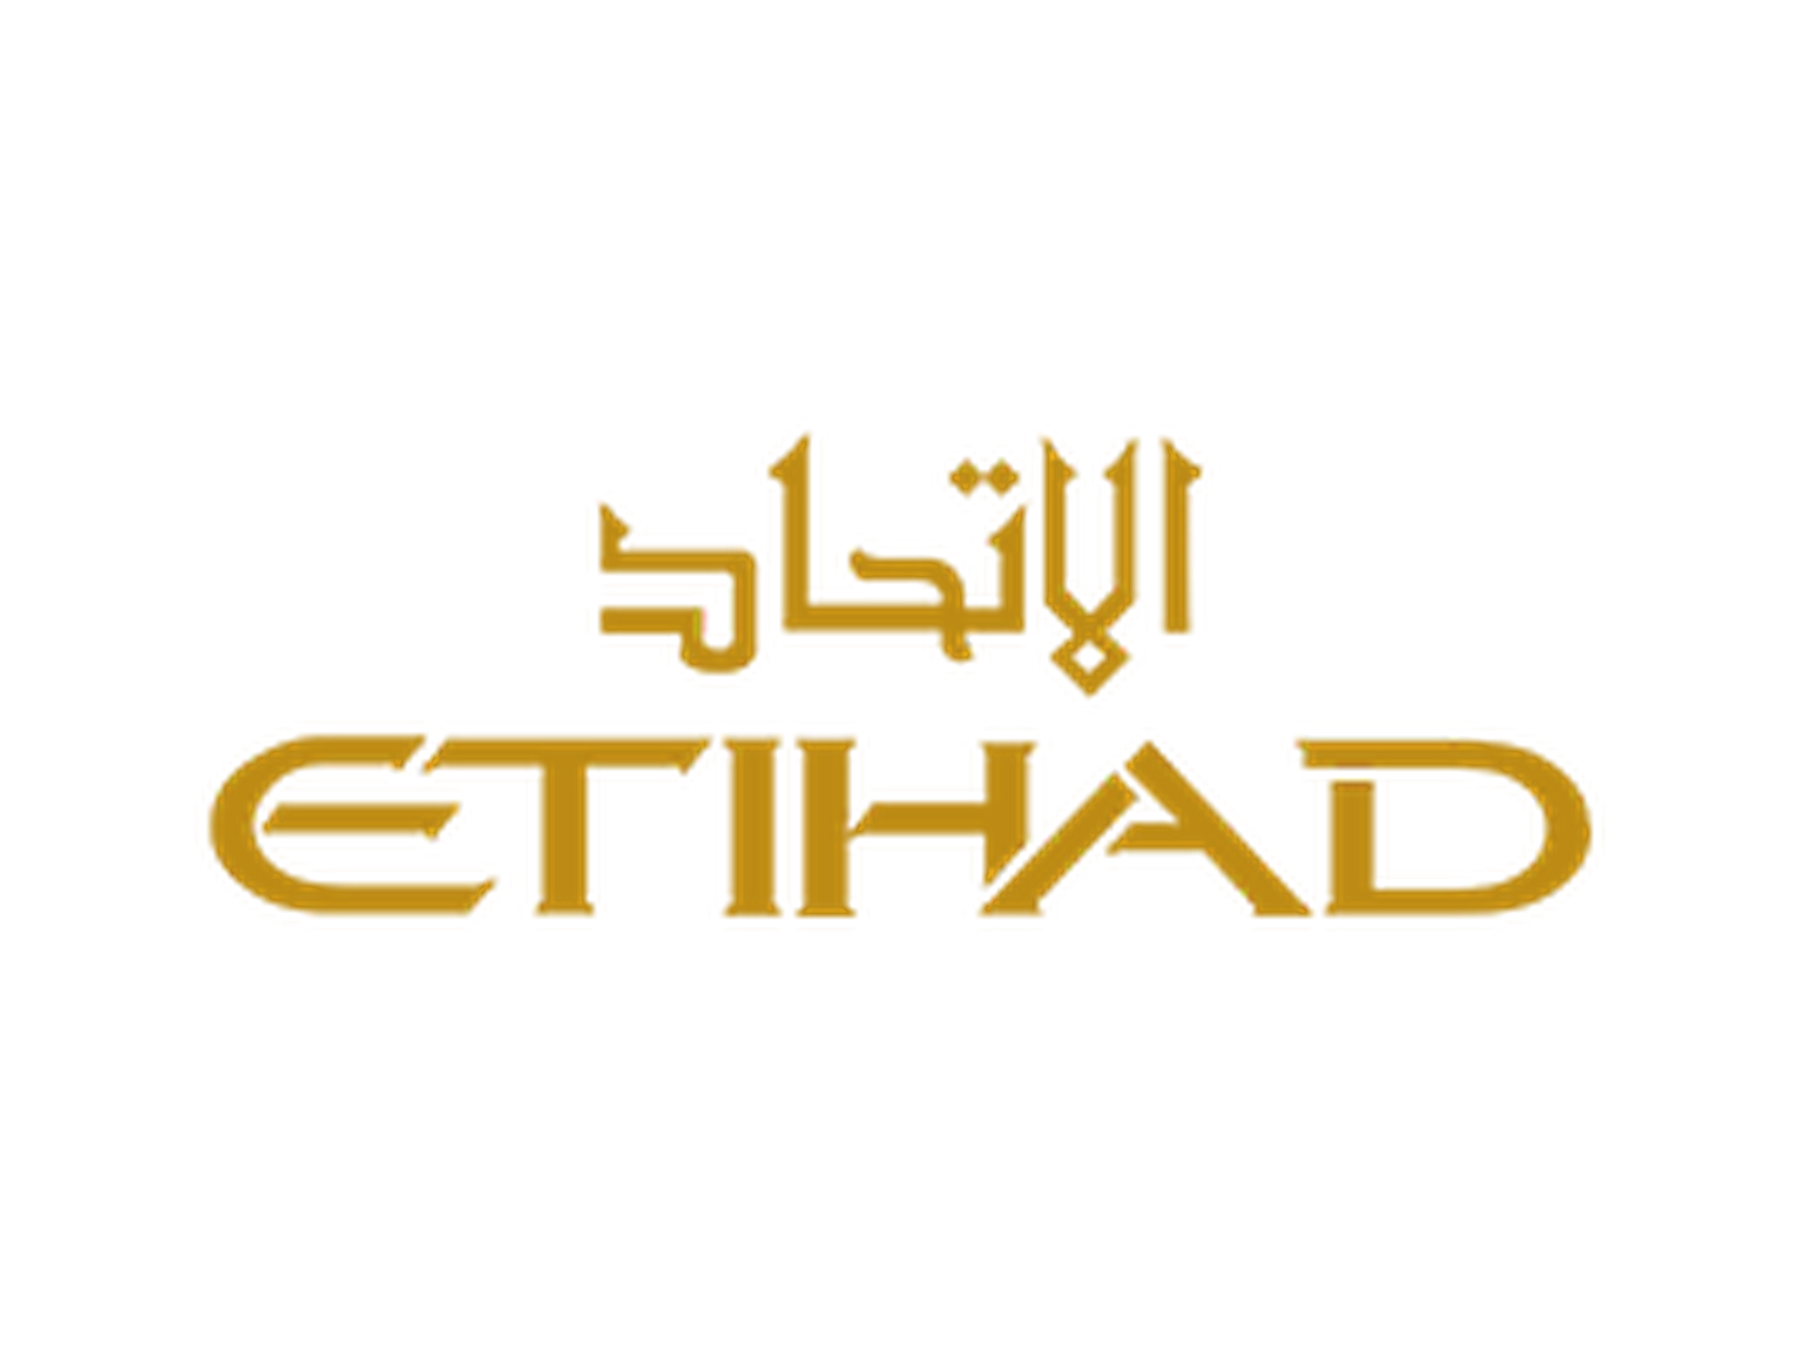 Etihad Promo Code